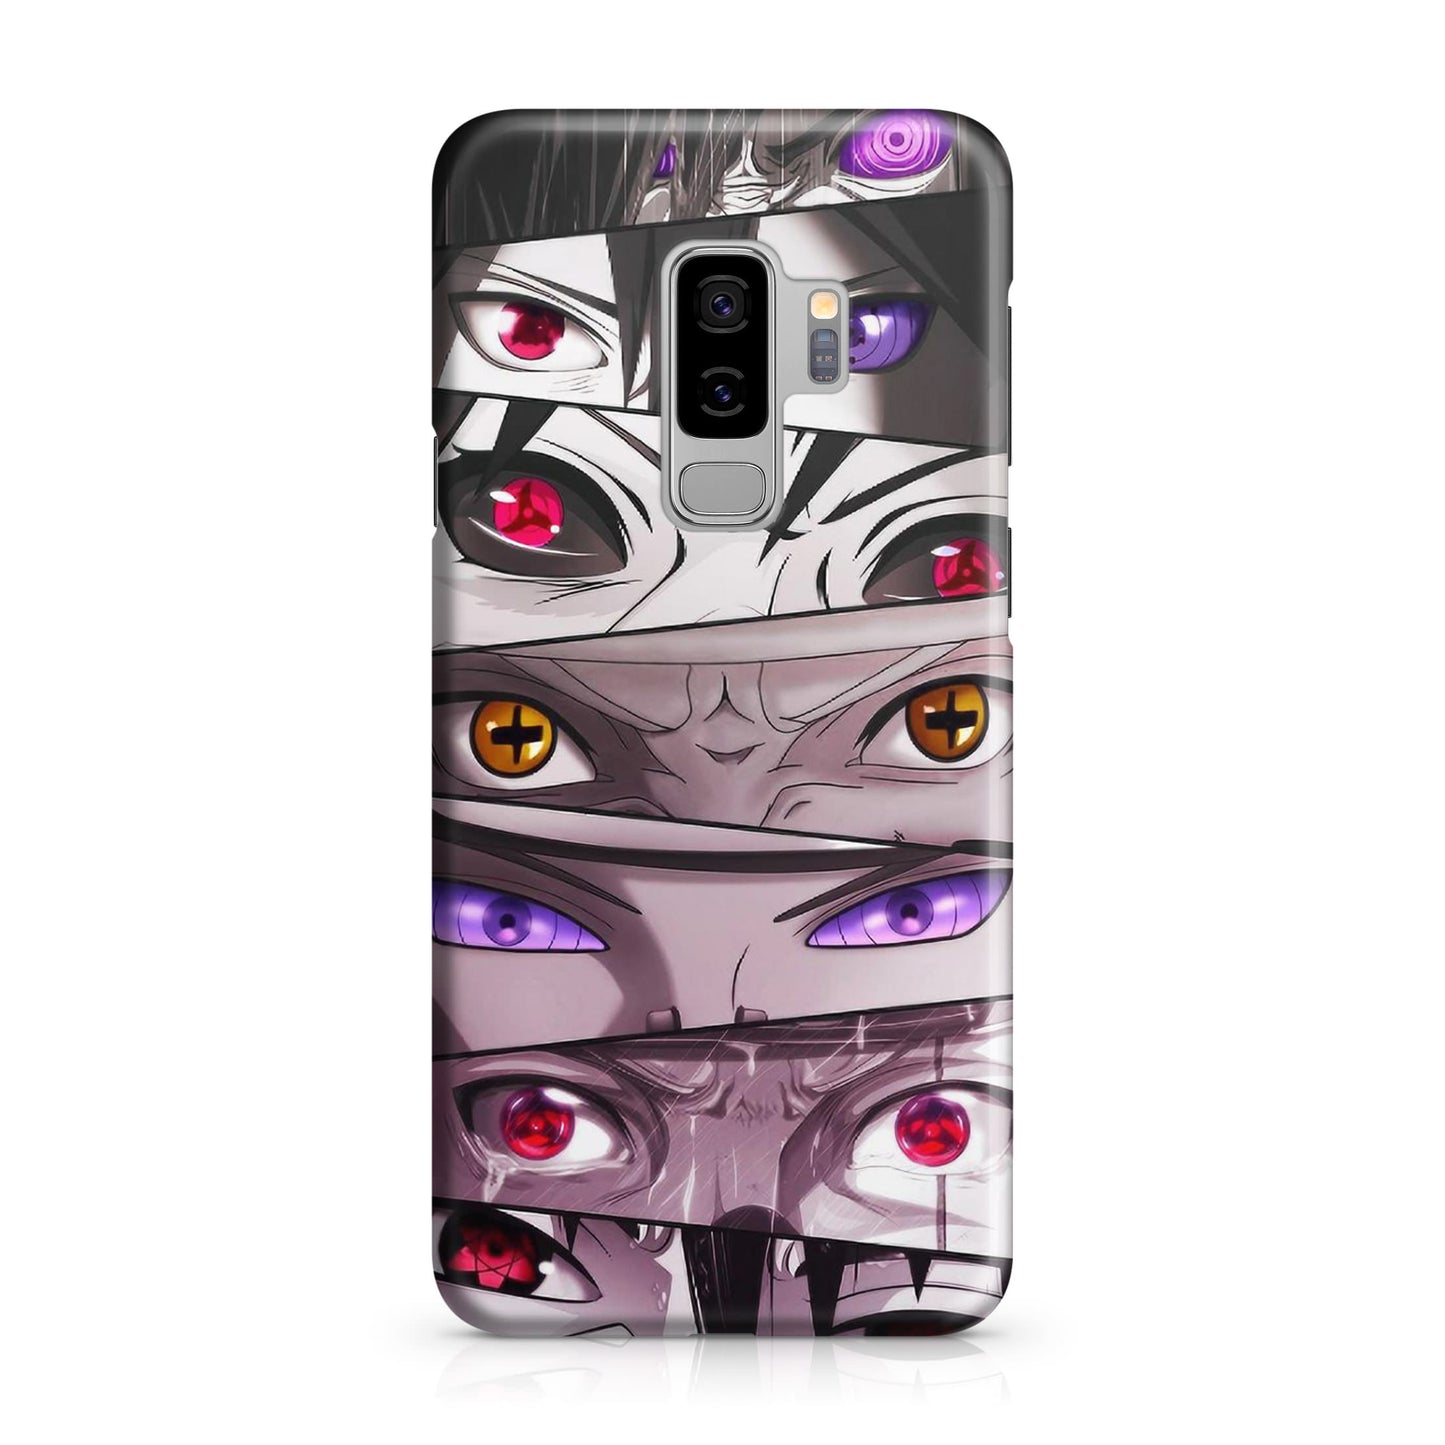 The Powerful Eyes Galaxy S9 Plus Case